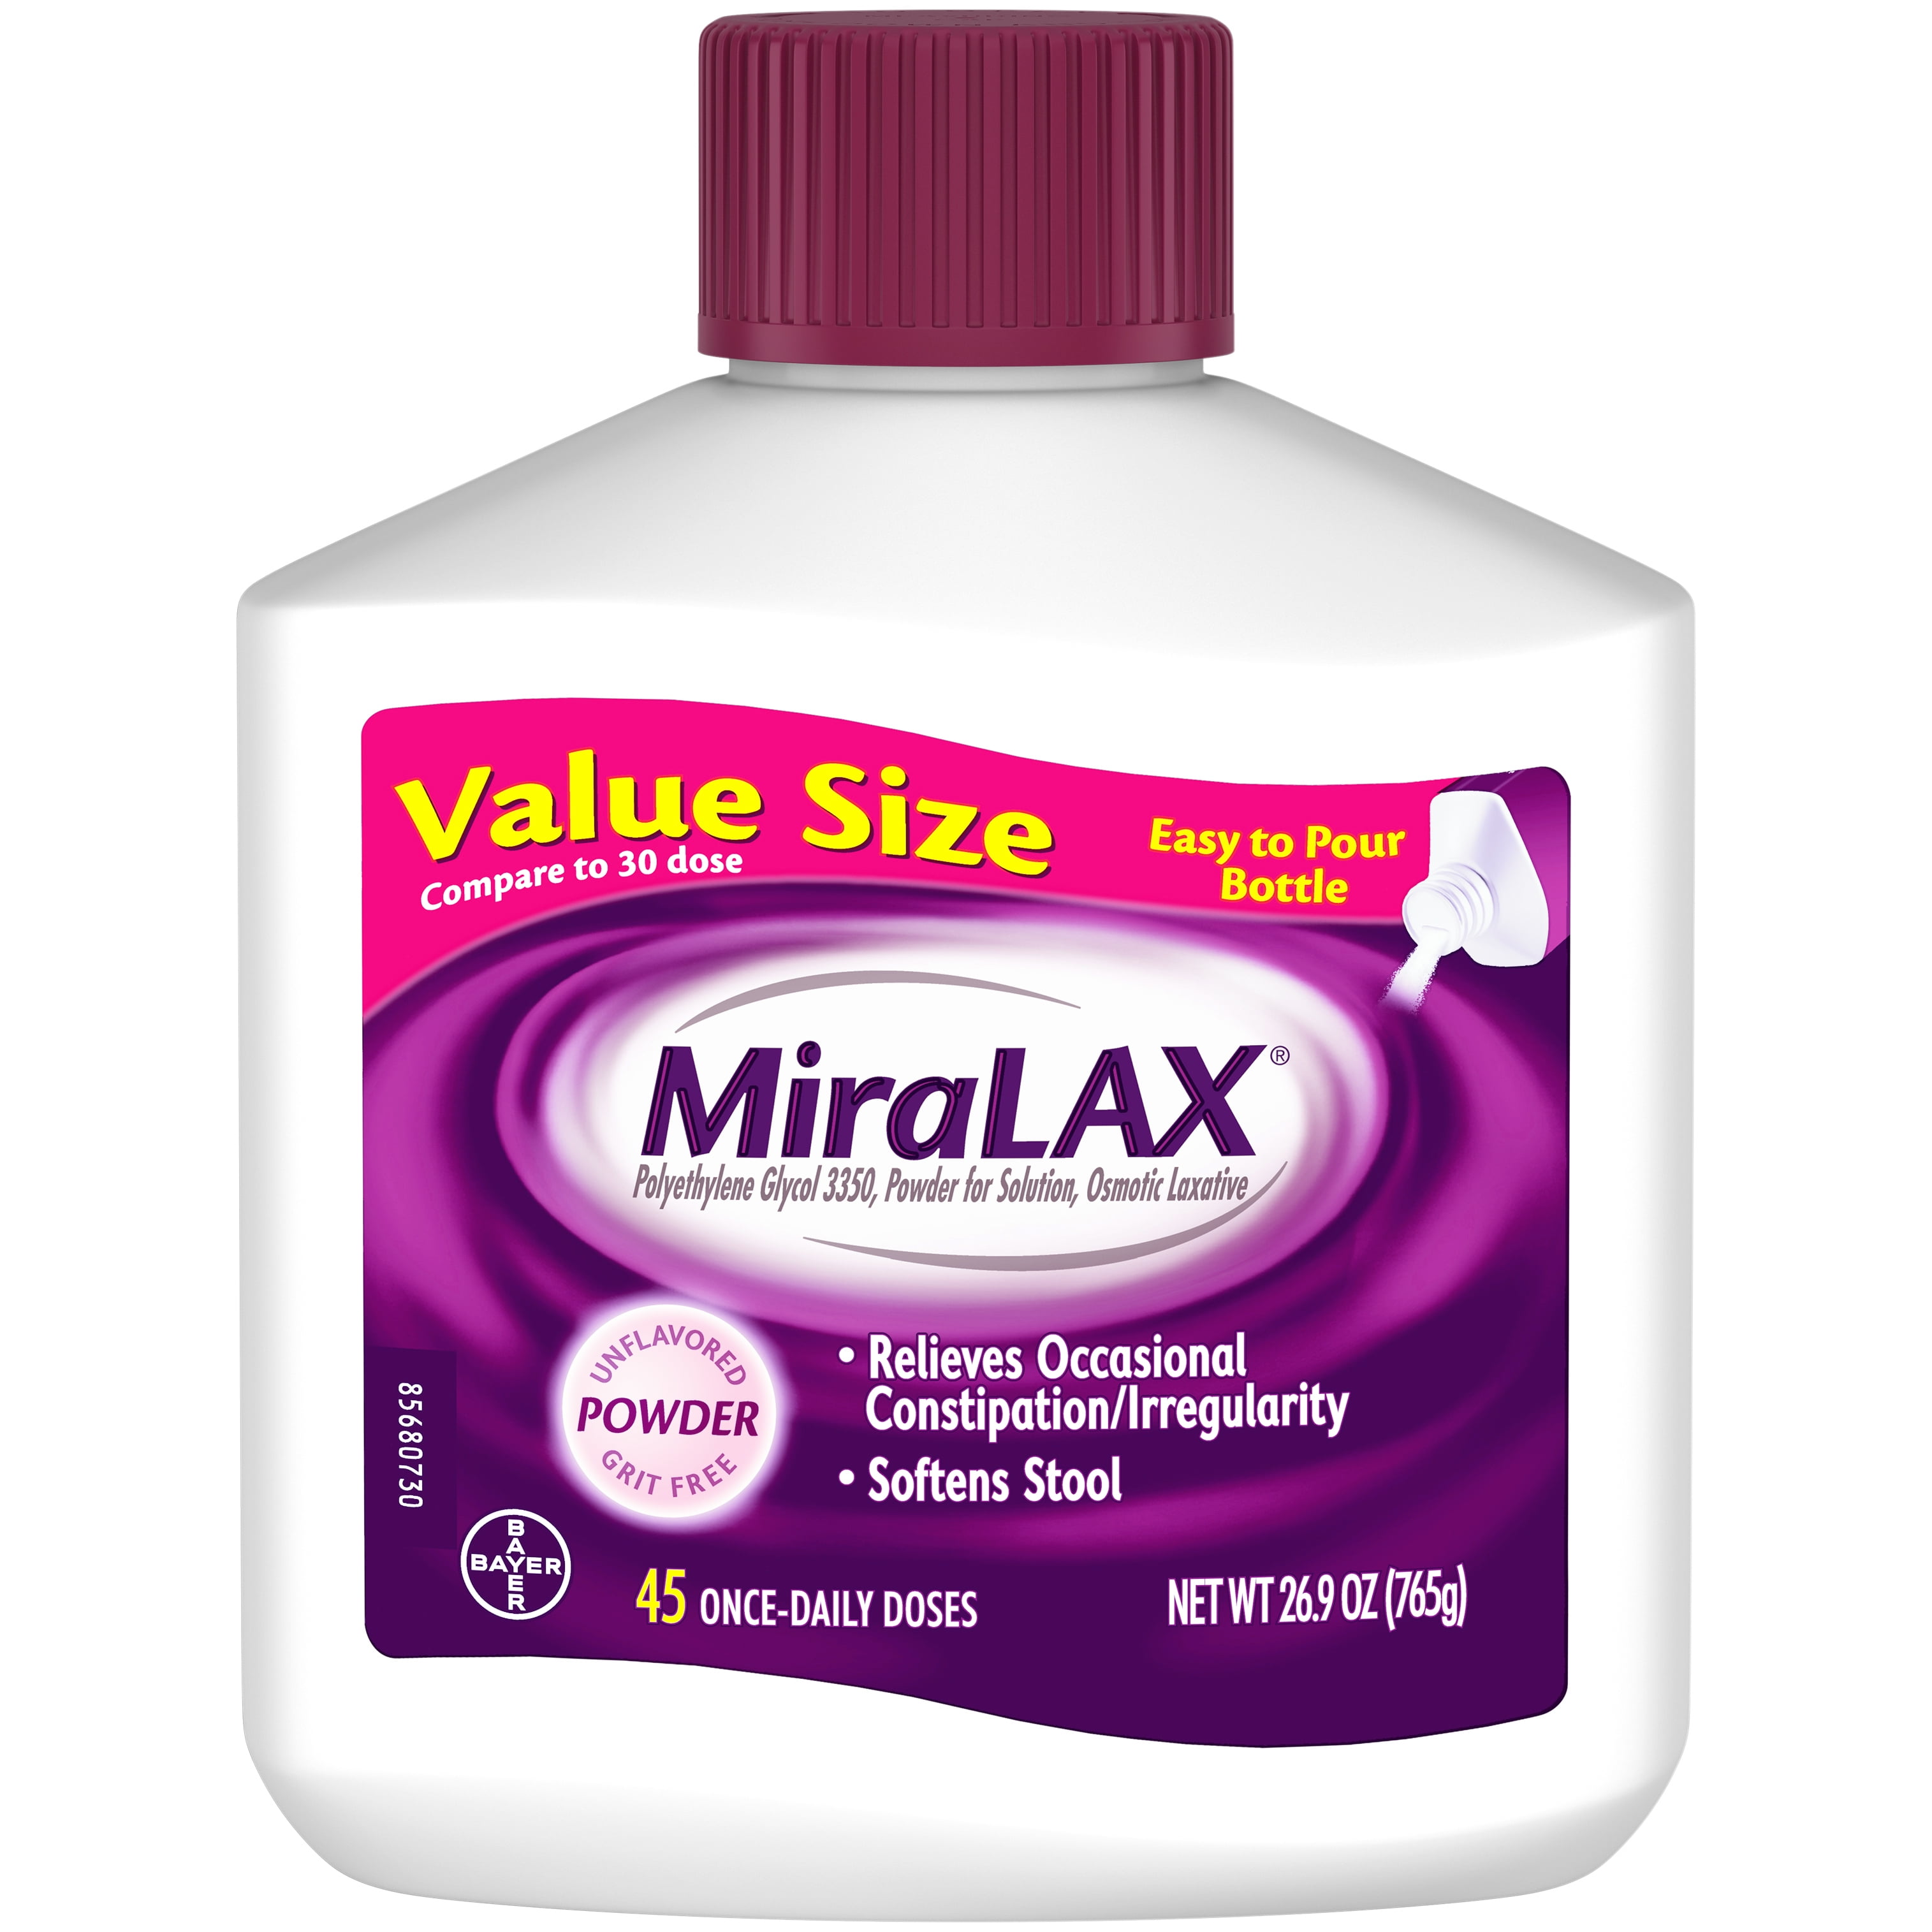 miralax-laxative-powder-for-gentle-constipation-relief-45-doses-walmart-walmart